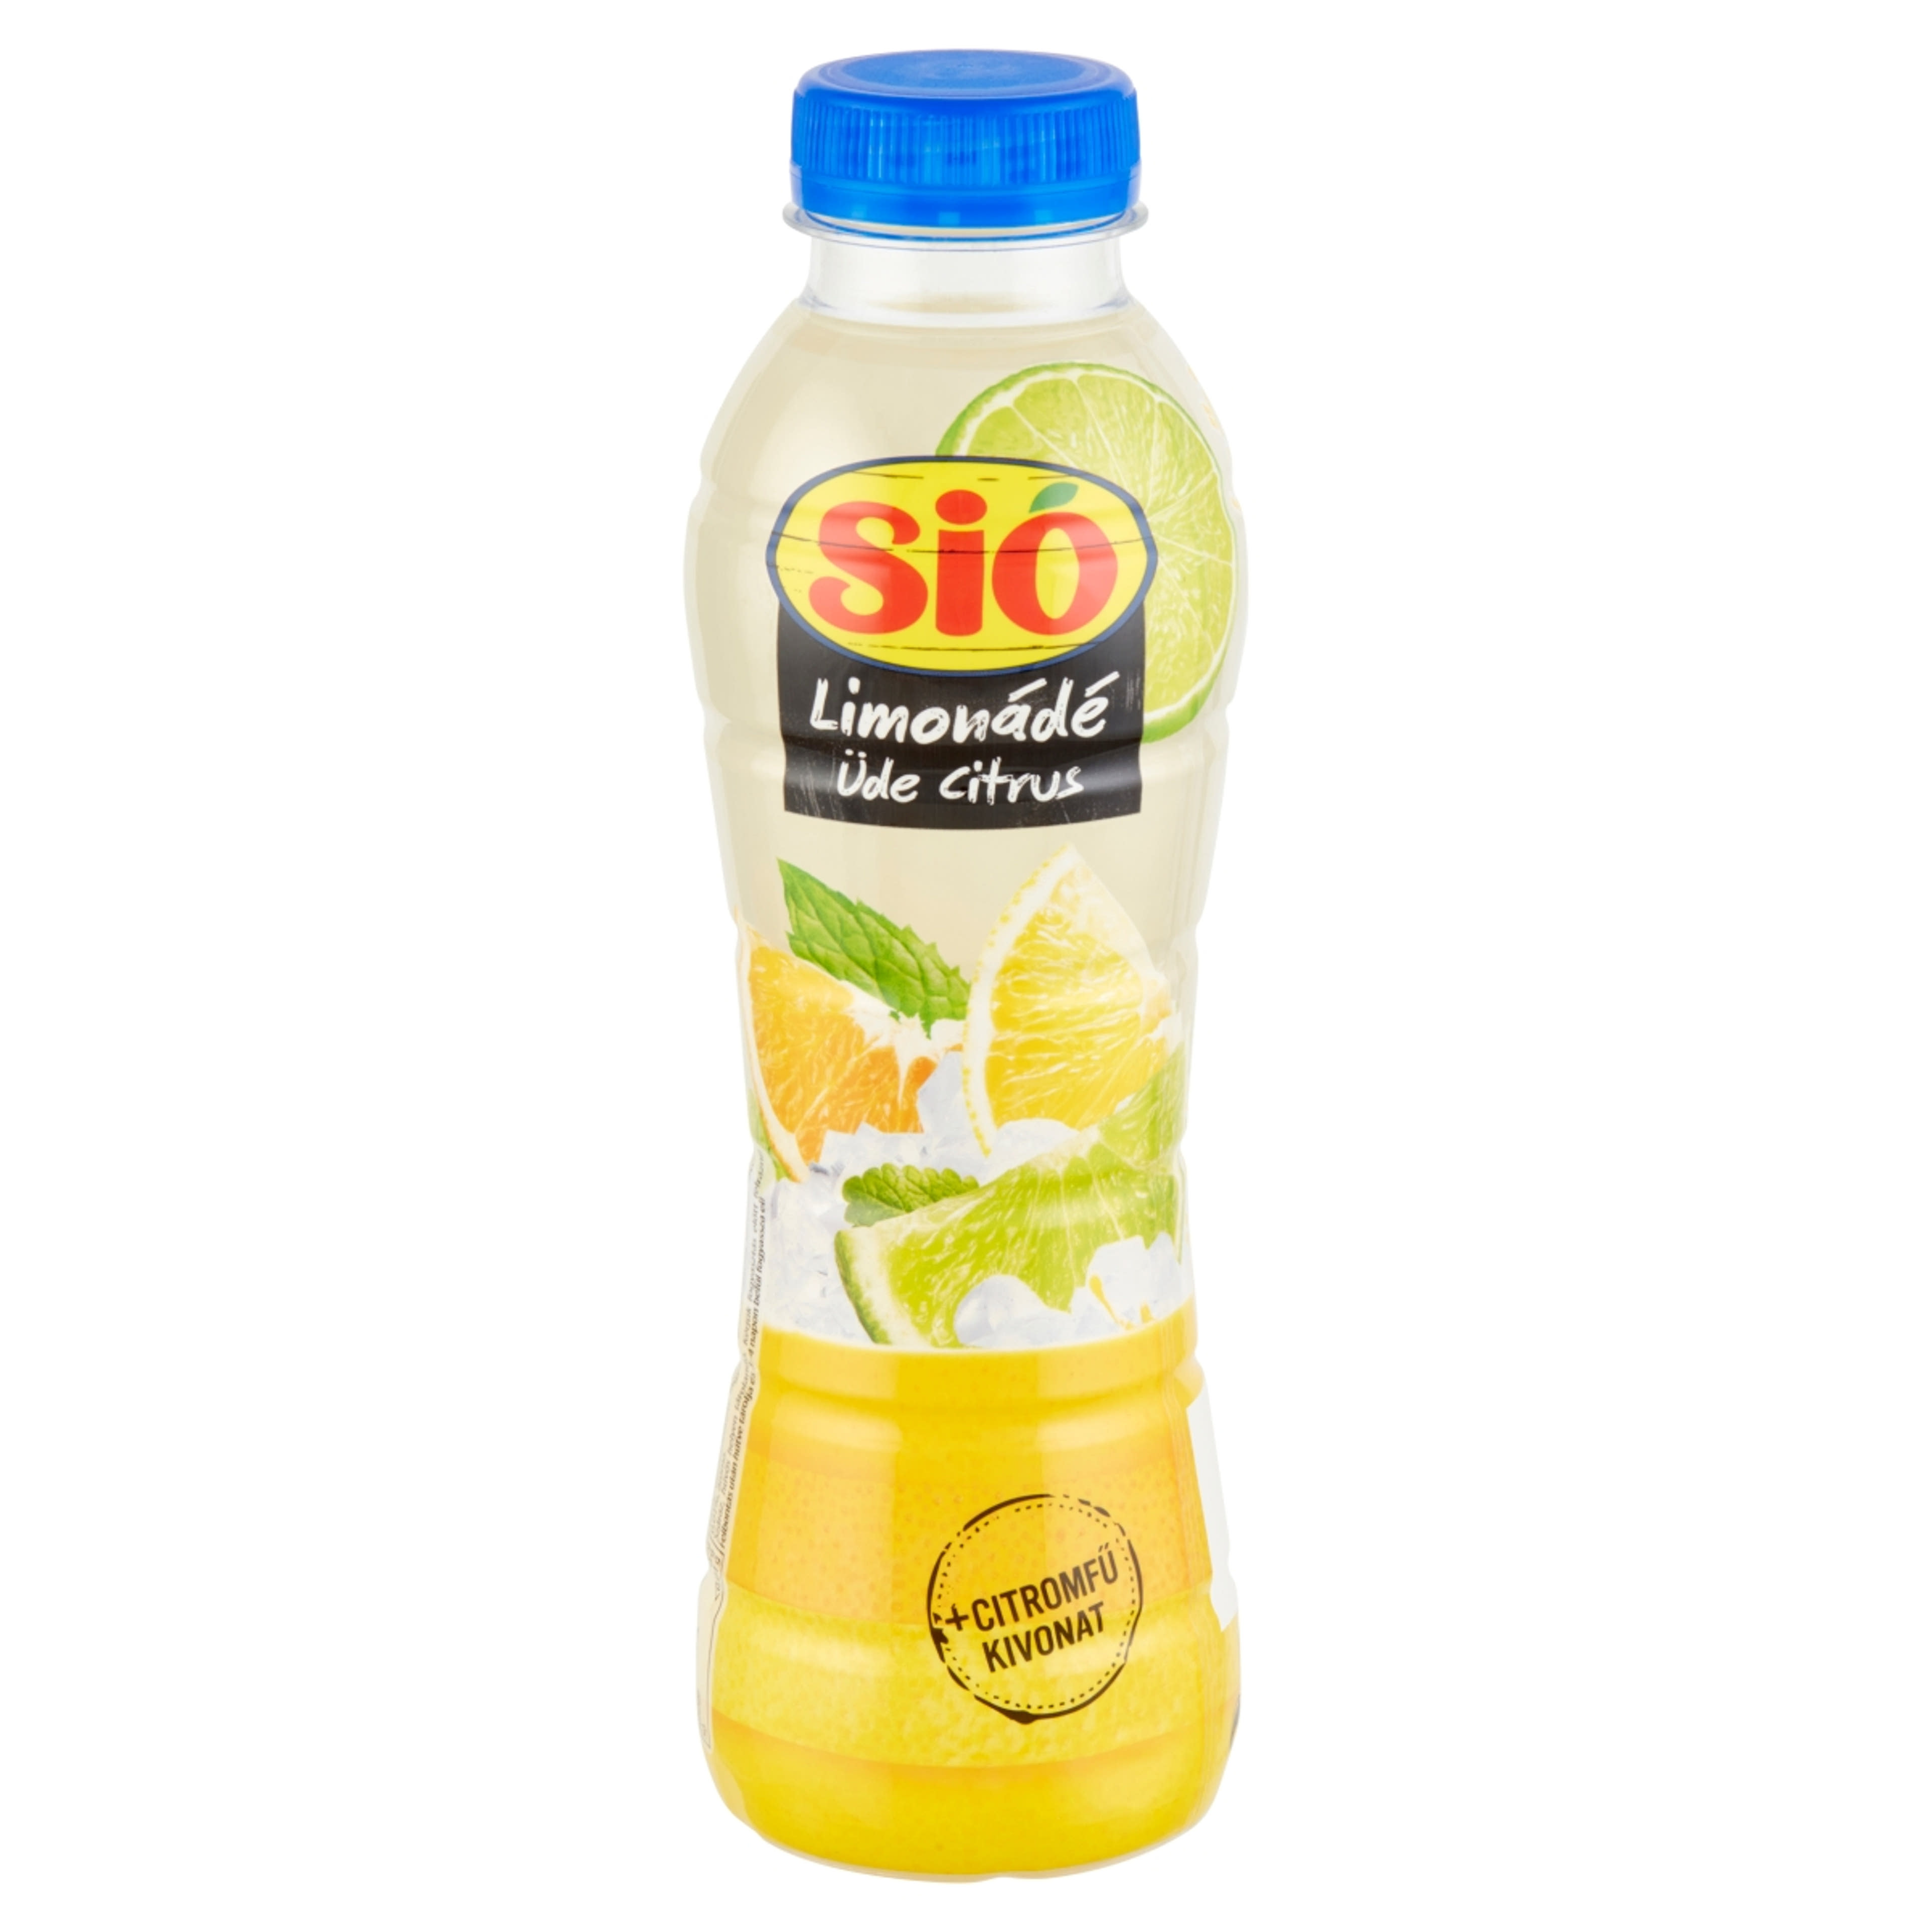 Sio limonádé üde citrus 8% - 500 ml-2